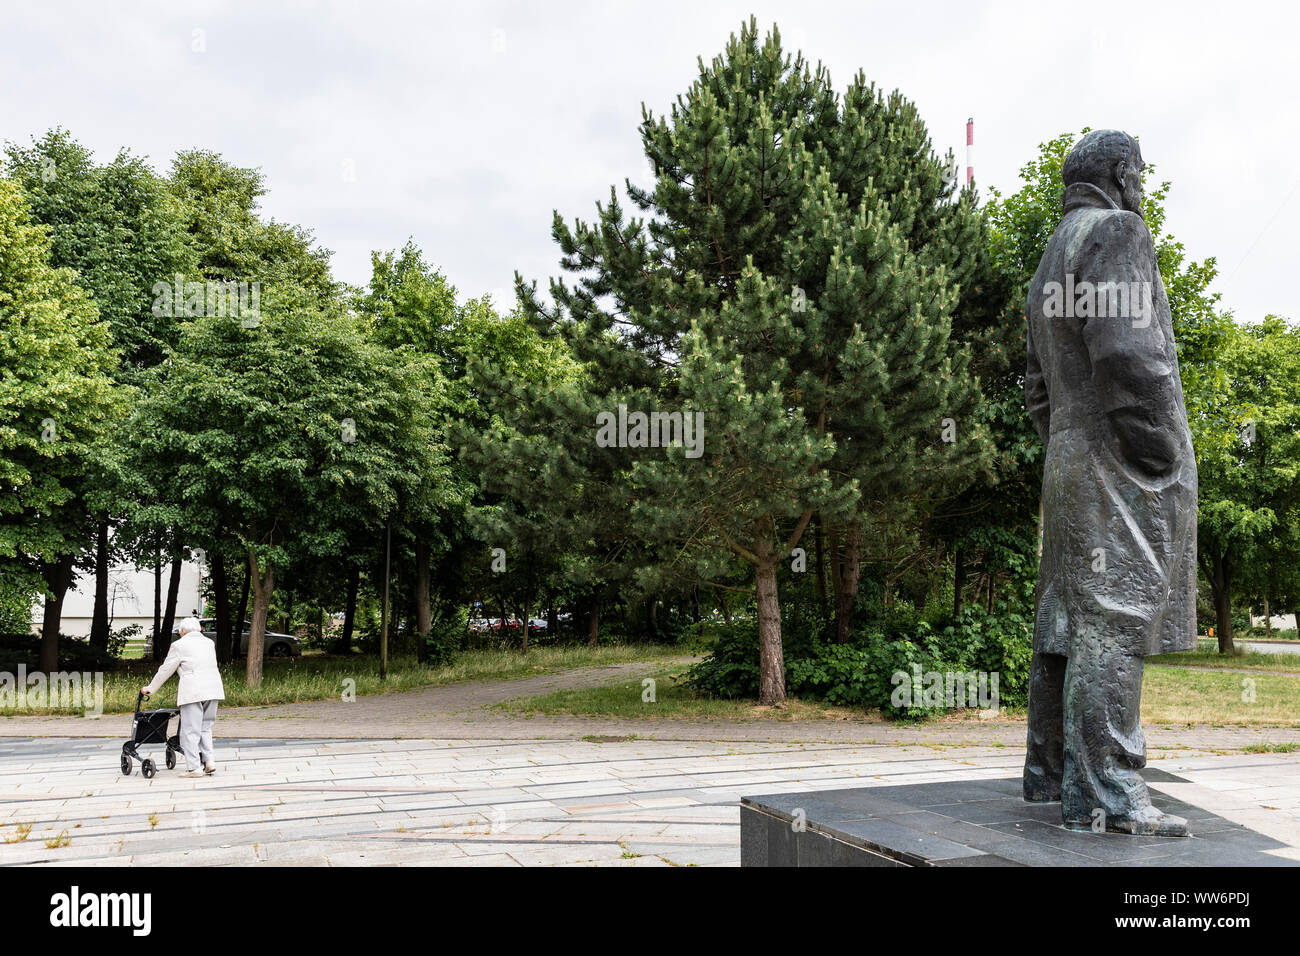 Germany, Mecklenburg-Vorpommern, Schwerin, Dreesch, Lenin statue and pensioner Stock Photo